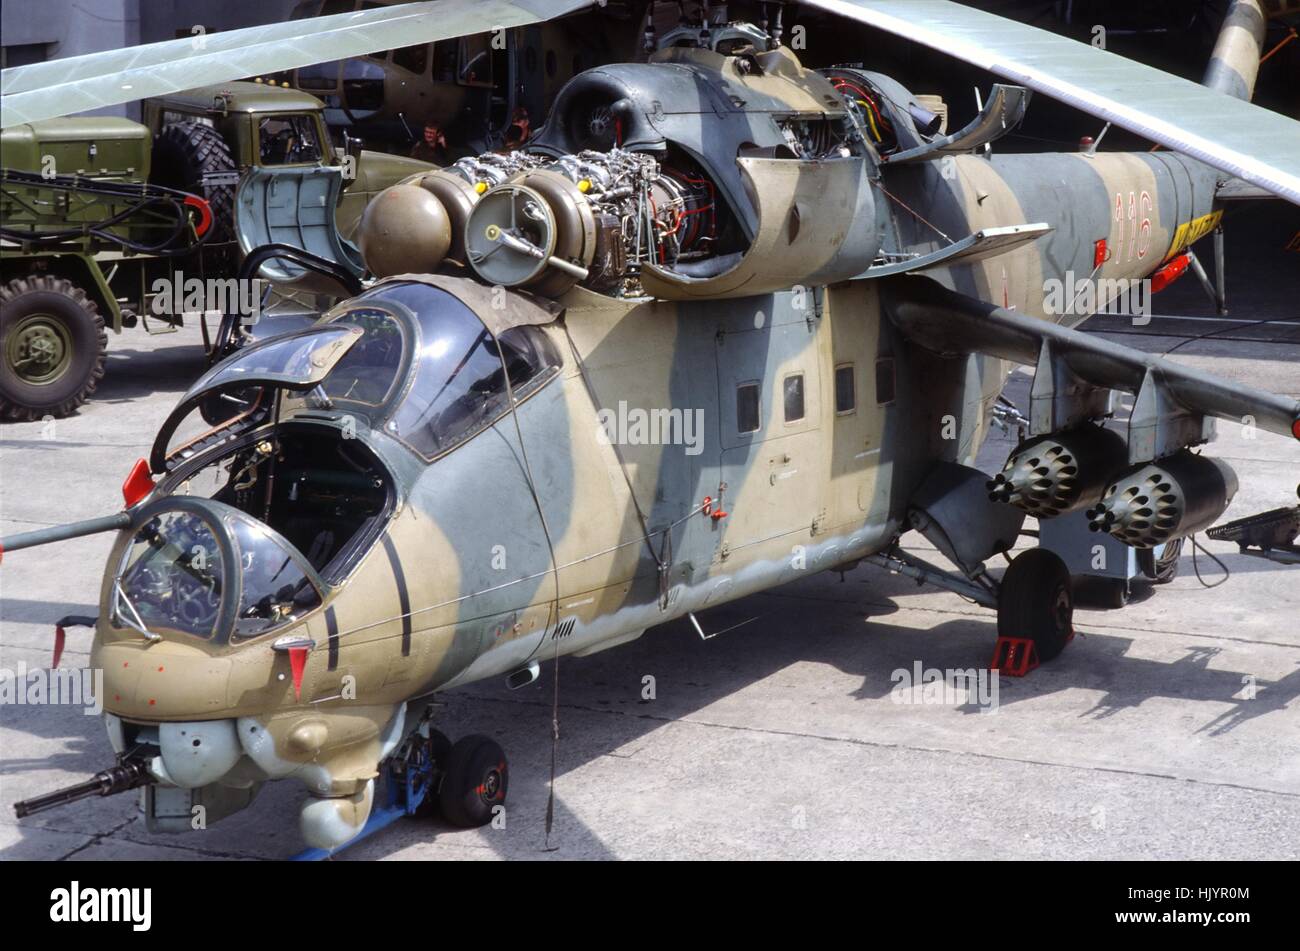 Hungarian Armed Forces, combat helicopters regiment of Veszprem, Soviet-built helicopter MIL 24 Stock Photo